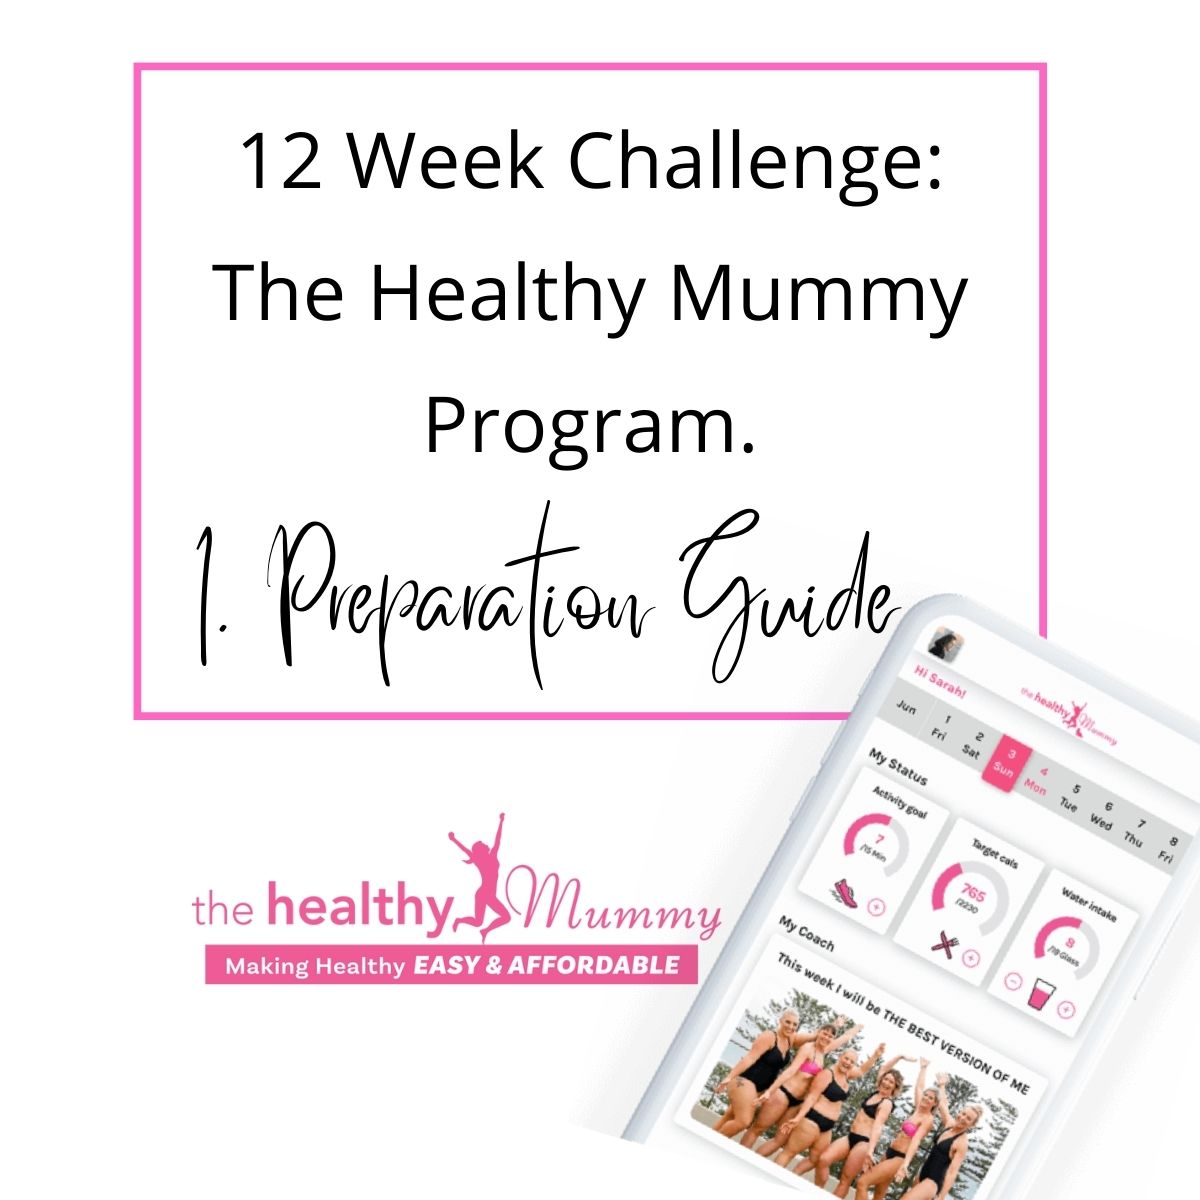 12 Week Challenge:  The Healthy Mummy Program - 1. Preparation Guide